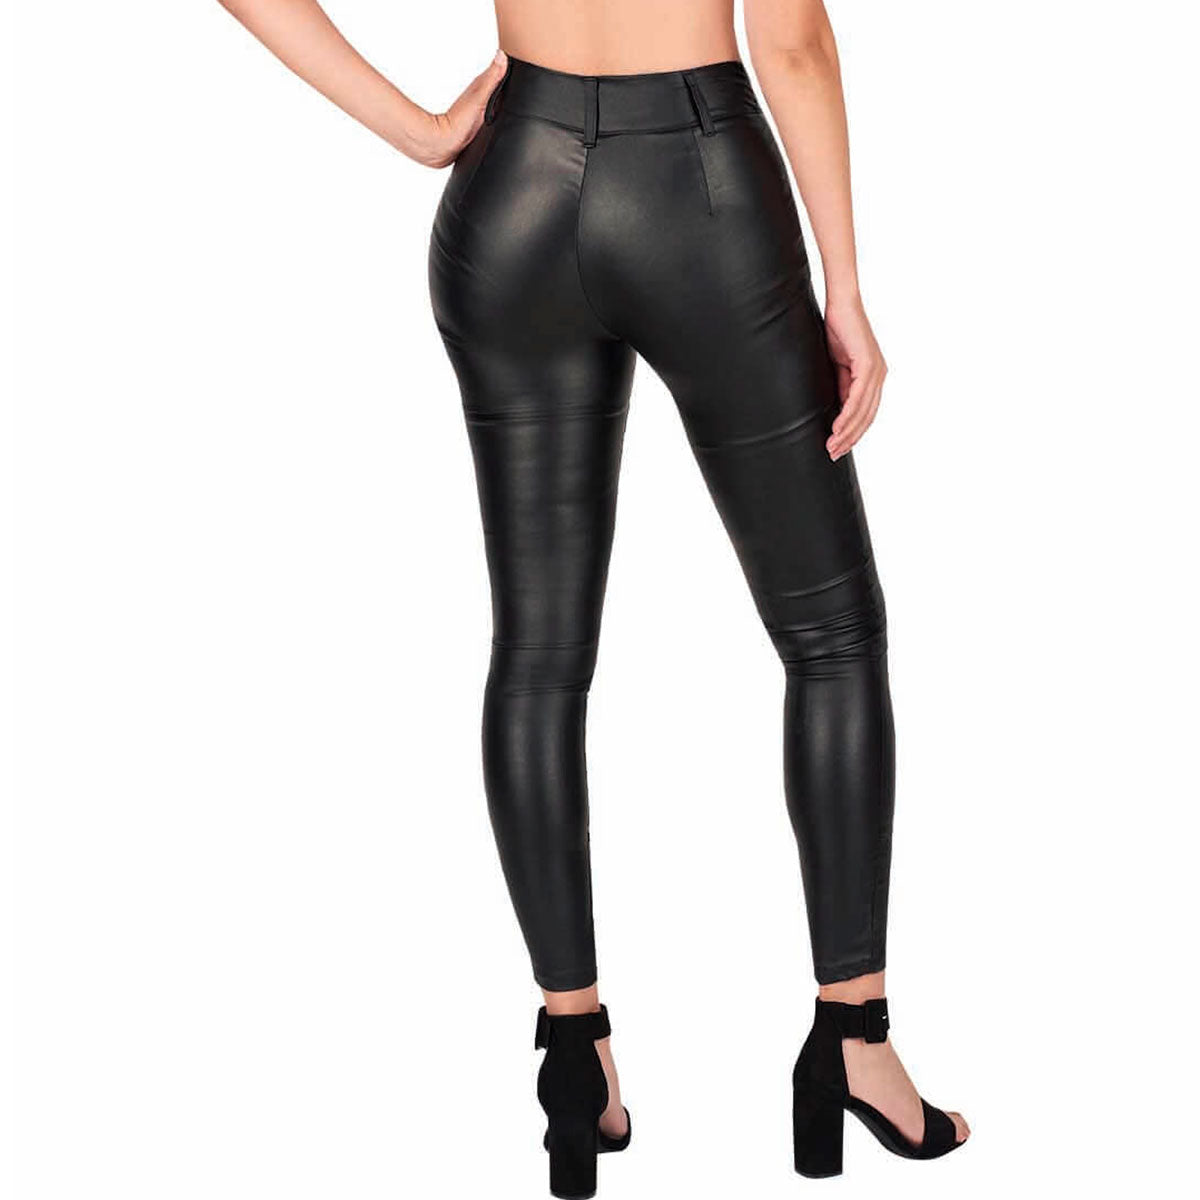 Pantalon Para Mujer TREVO 1034-07 Negro Tipo Cuero